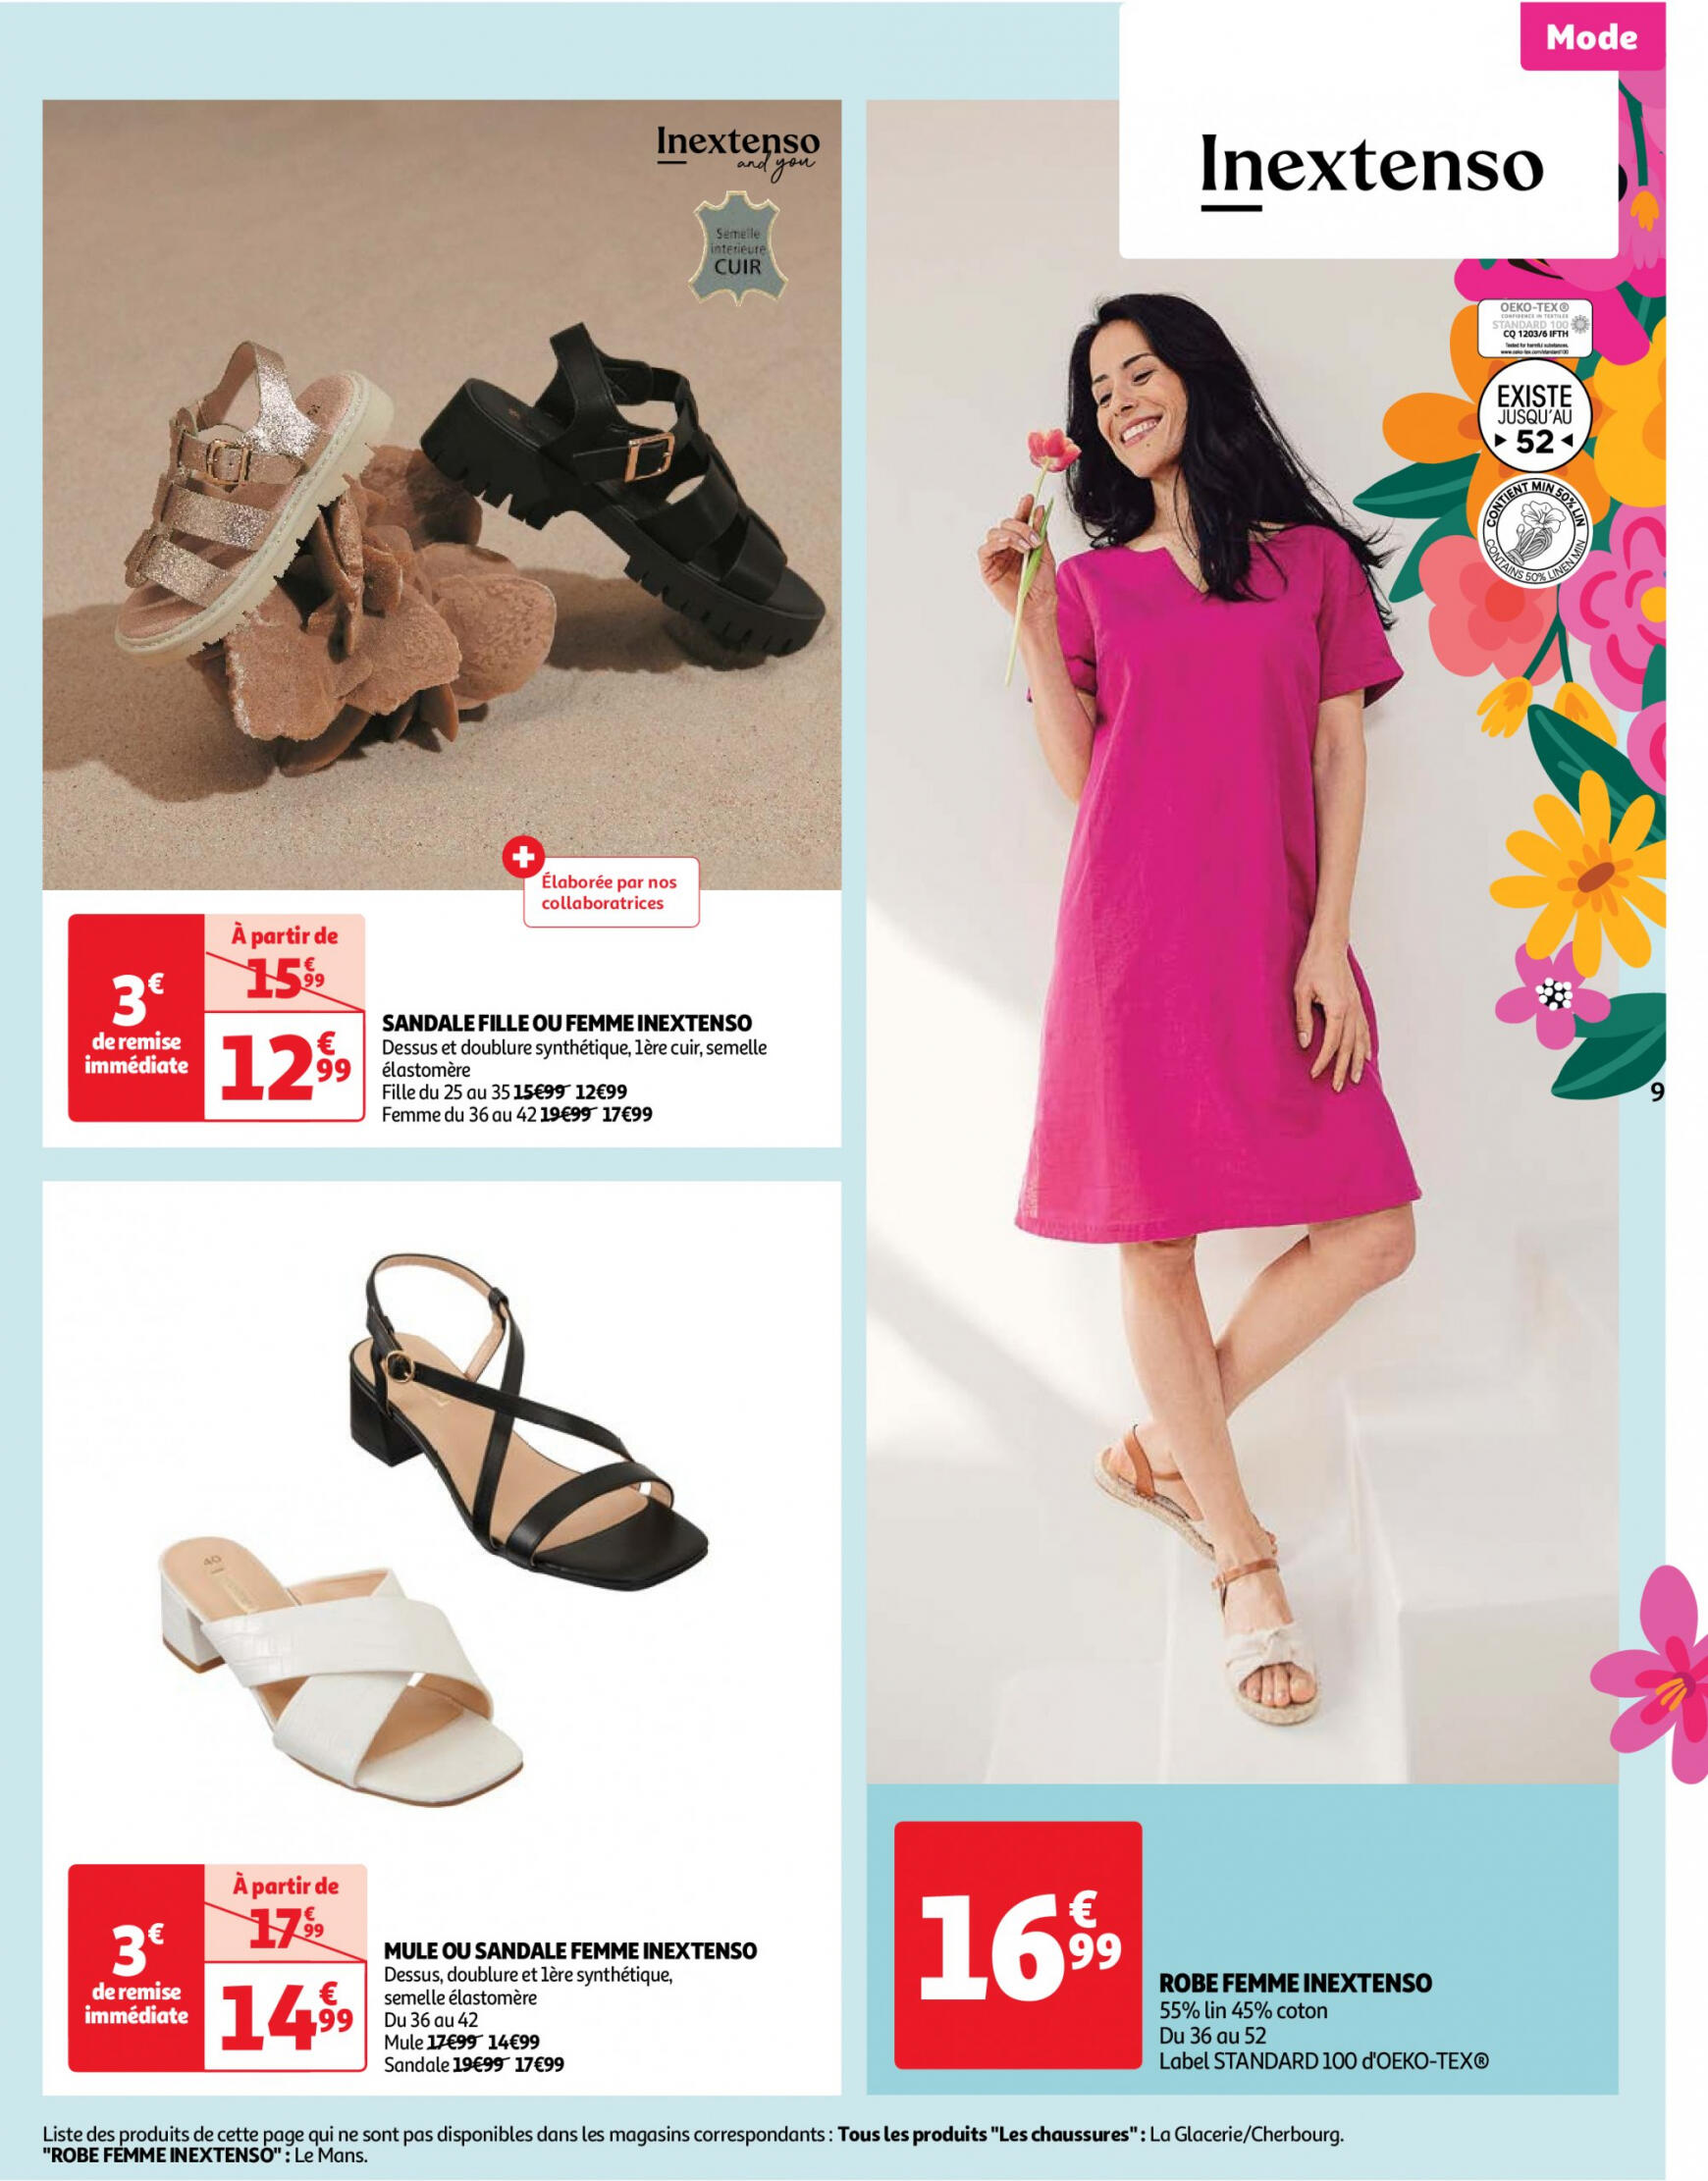 auchan - Auchan - Merci maman folder huidig 14.05. - 26.05. - page: 9